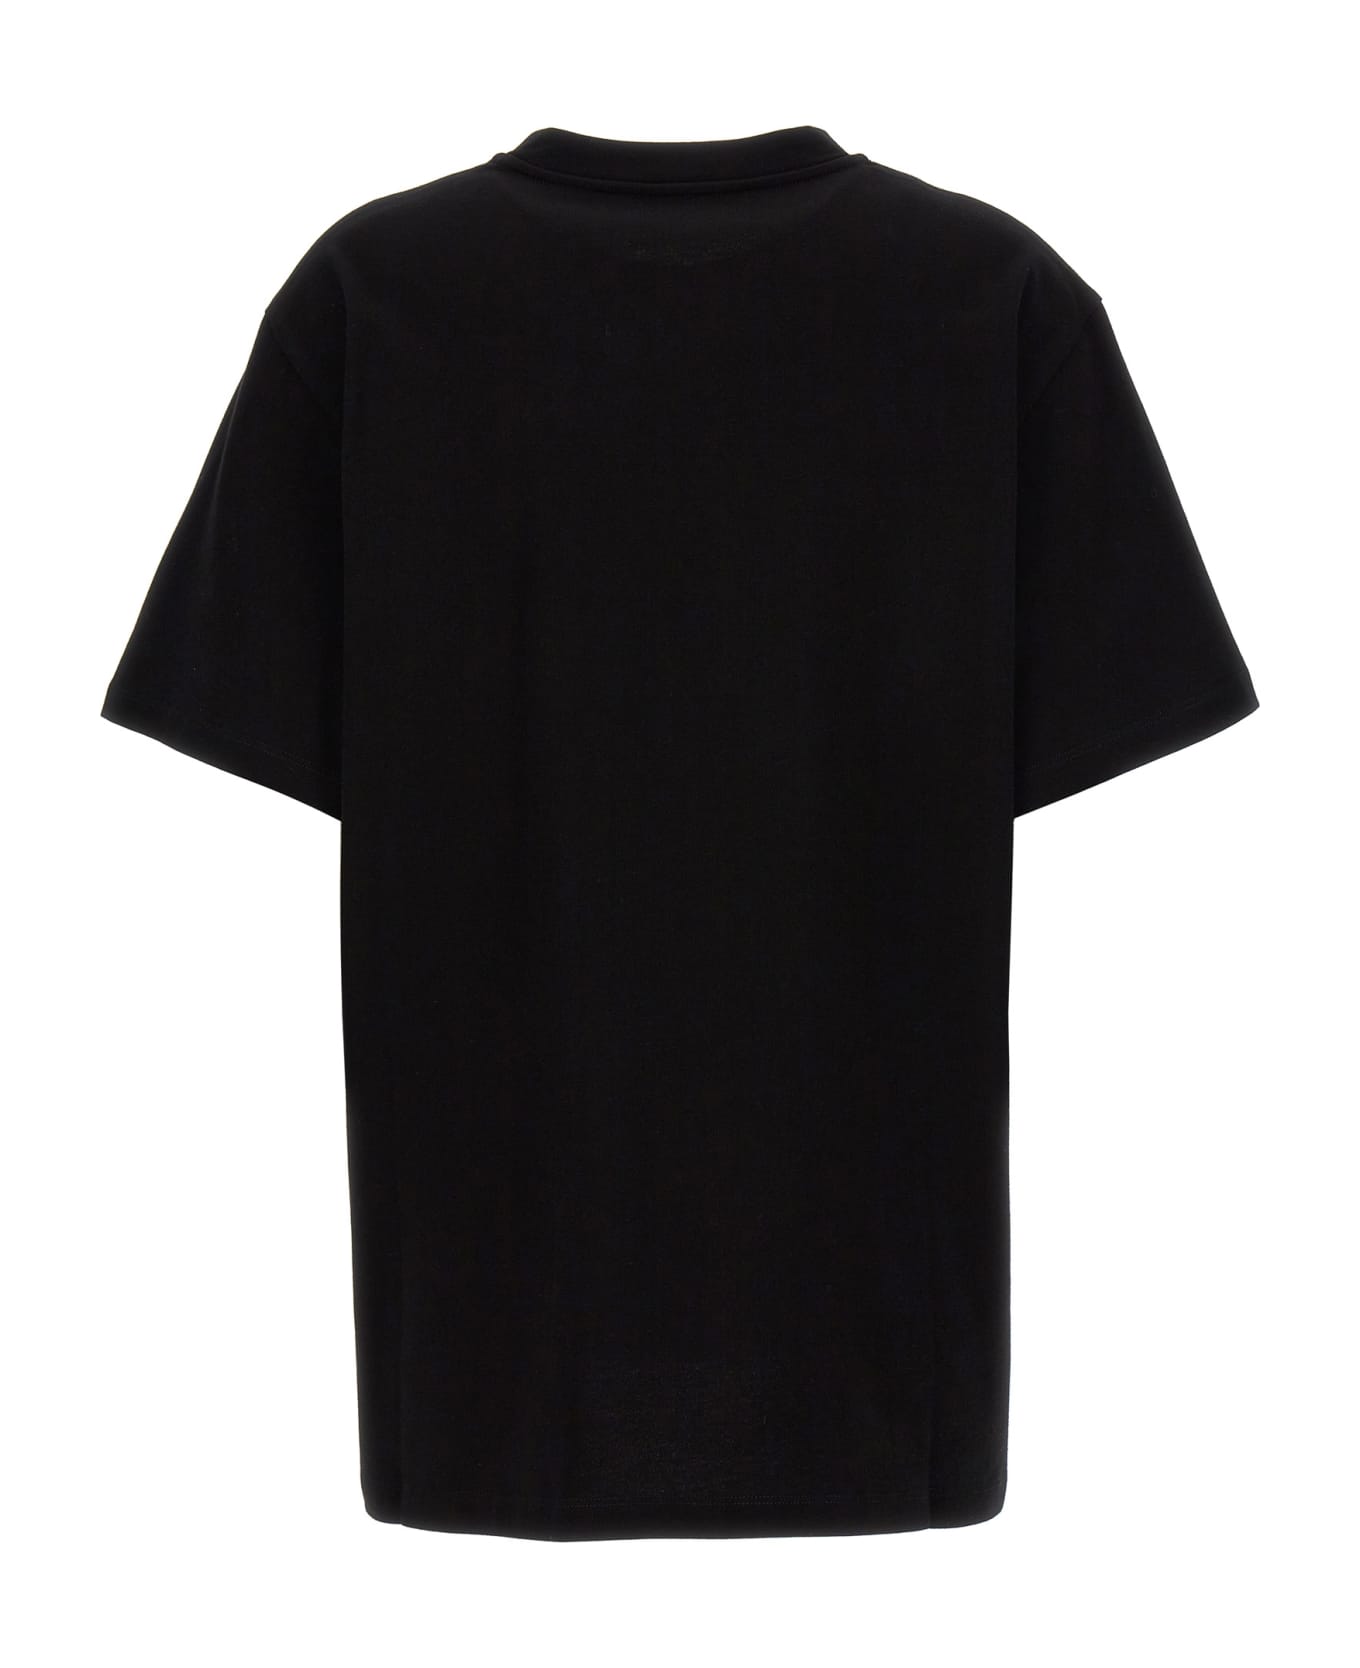 Stella McCartney Organic Cotton T-shirt Logo - Black